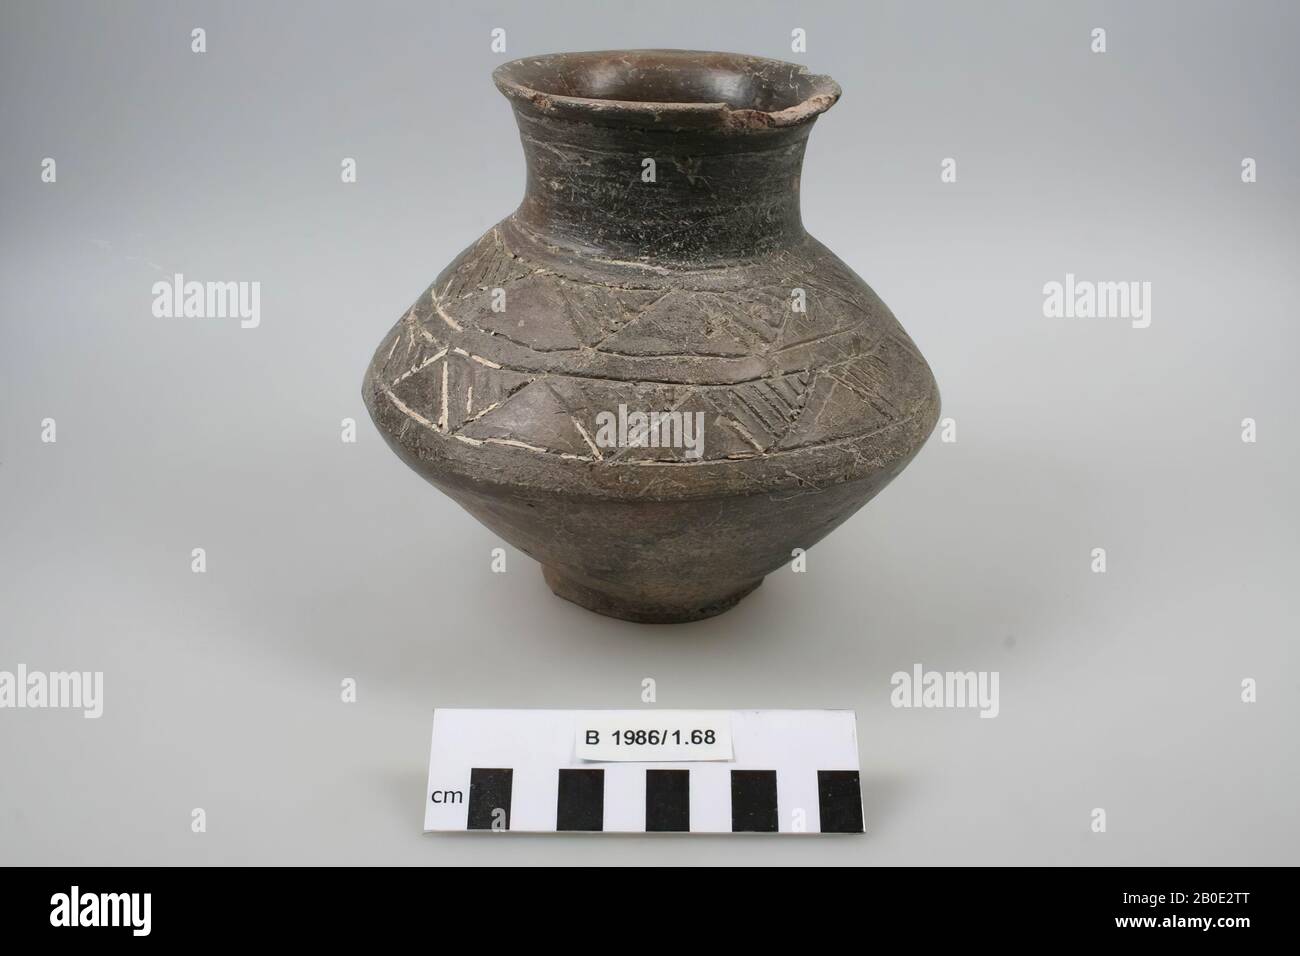 Ancient Near East, crockery, earthenware, H 15.3 cm, D 16.6 cm, D border 7.4 cm, Location, Iran Stock Photo